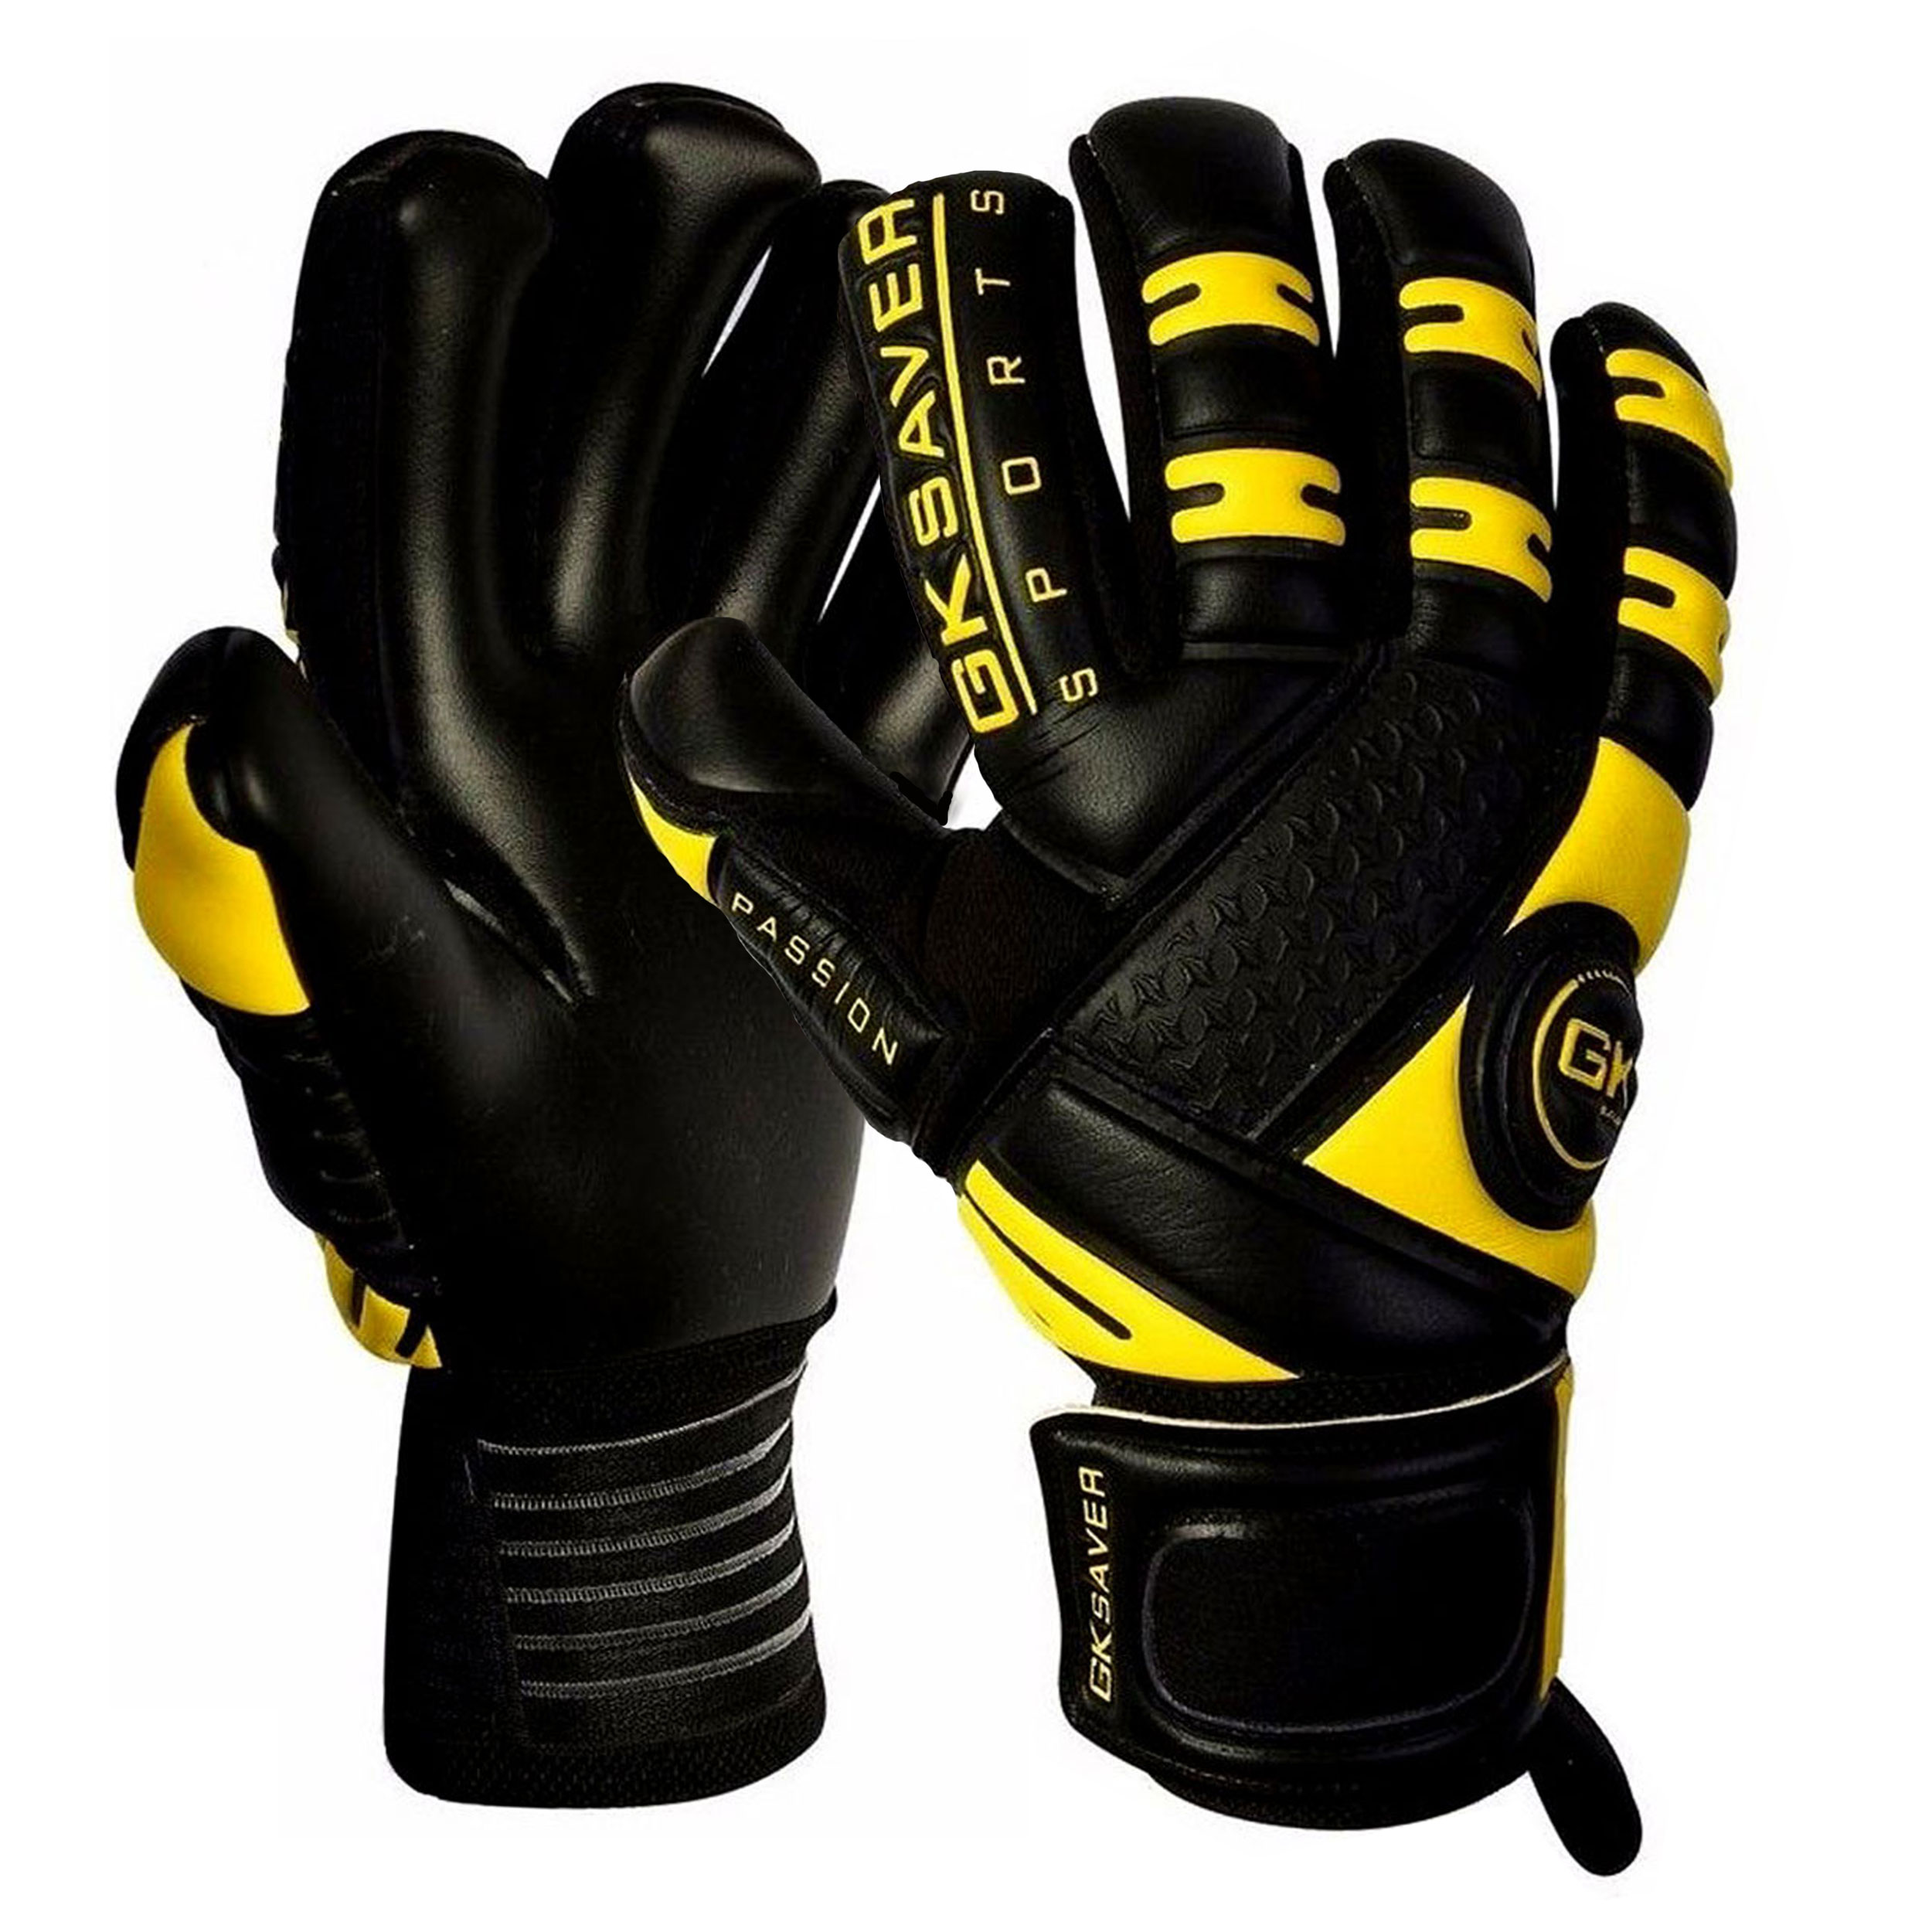 Supersave Pro Suprema Hybrid cut Contact Black Football Goalkeeper Gloves 